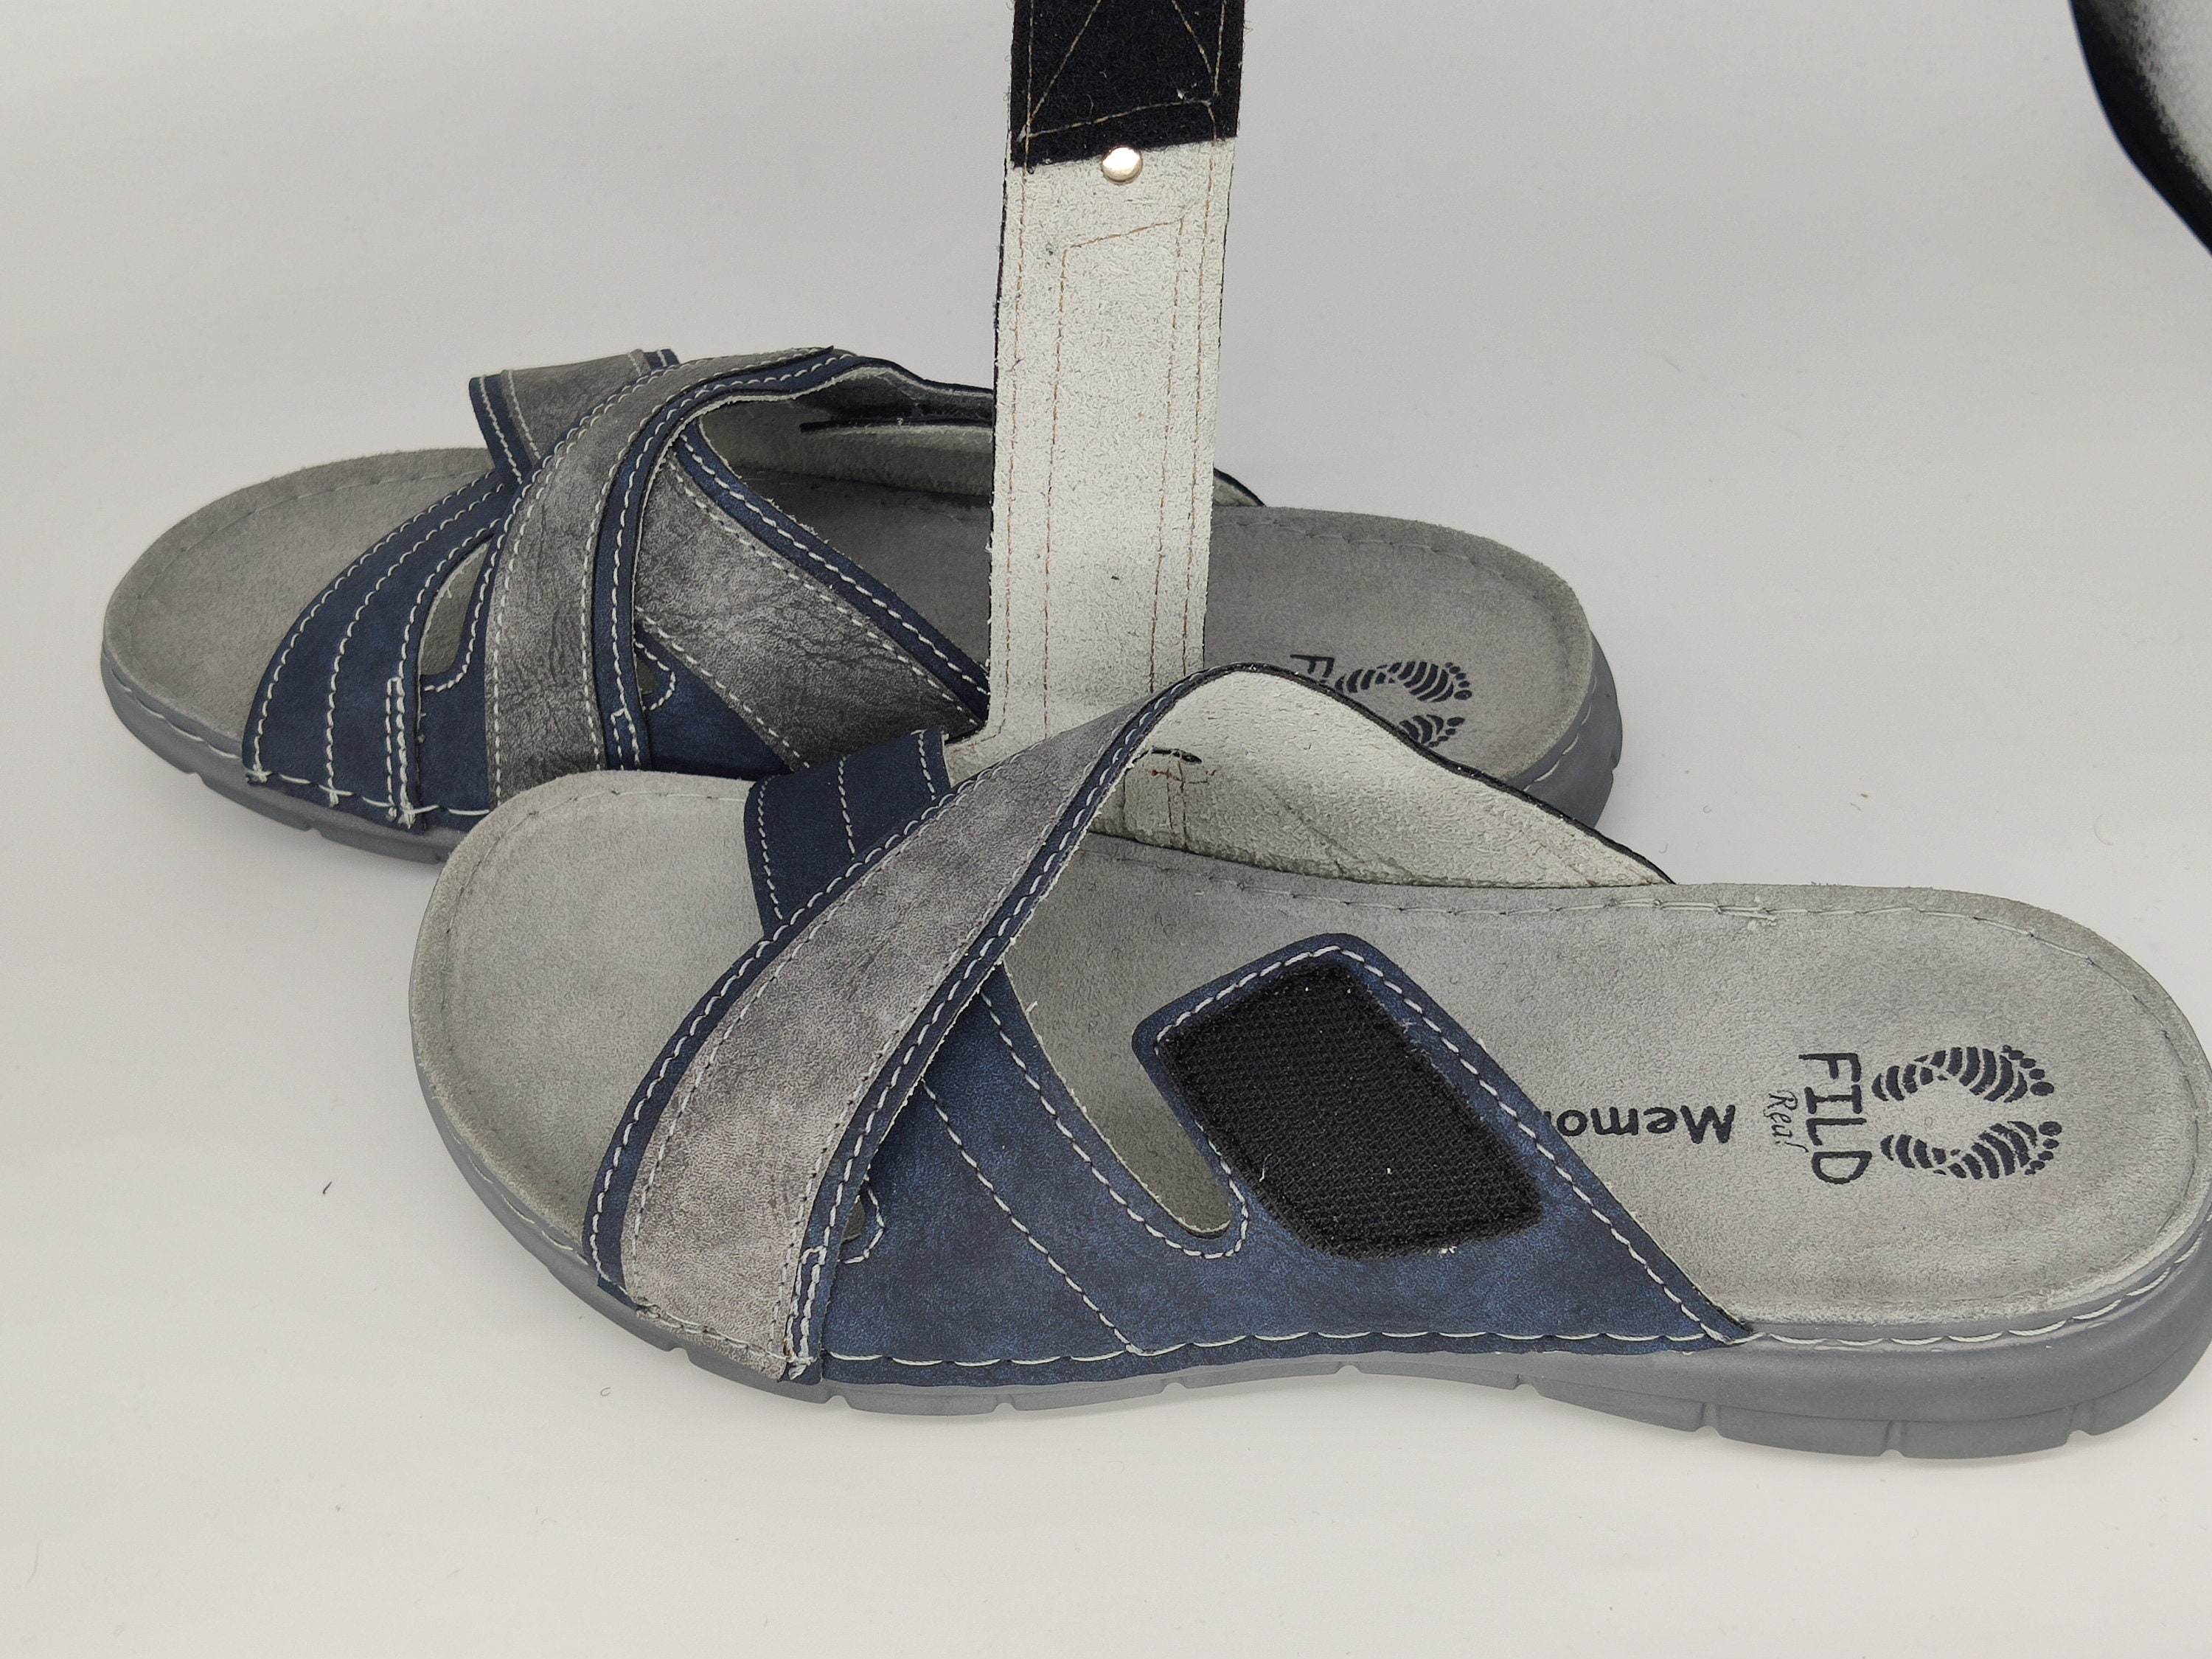 COMFORT-ANATOMIC Slippers Men's'' Greek Handmade Leather Sandals, Slim ...